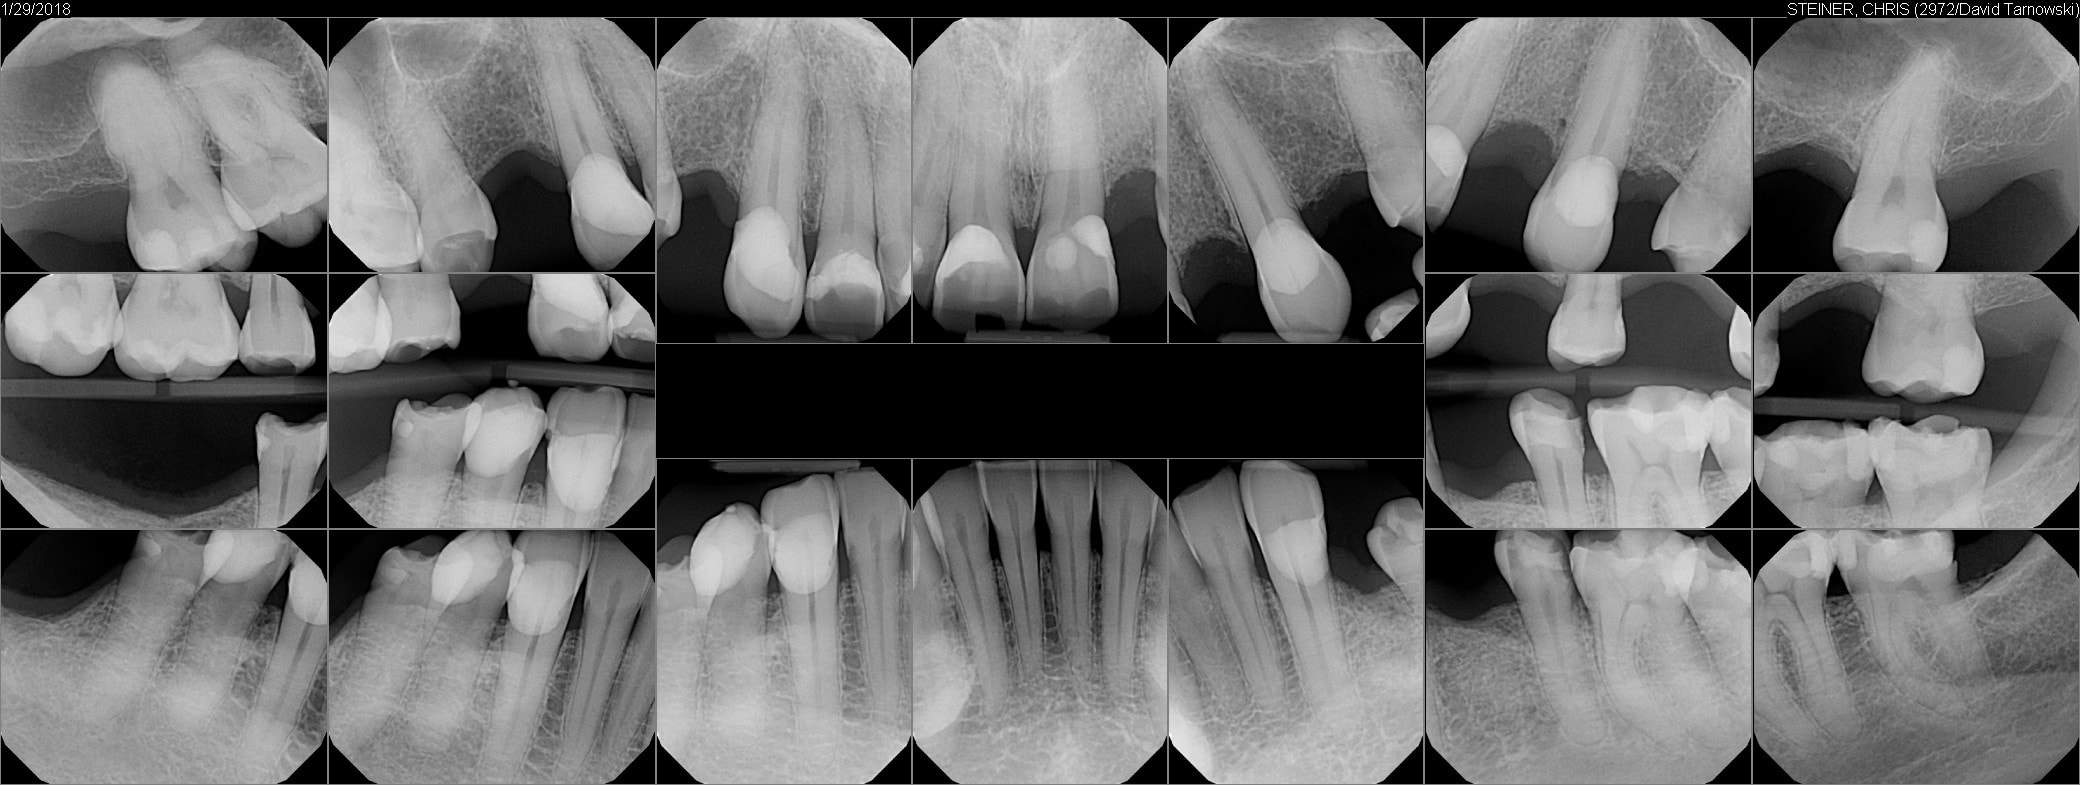 HealthNow Dental (Dr. Tarnowski) X-rays, January 29, 2018